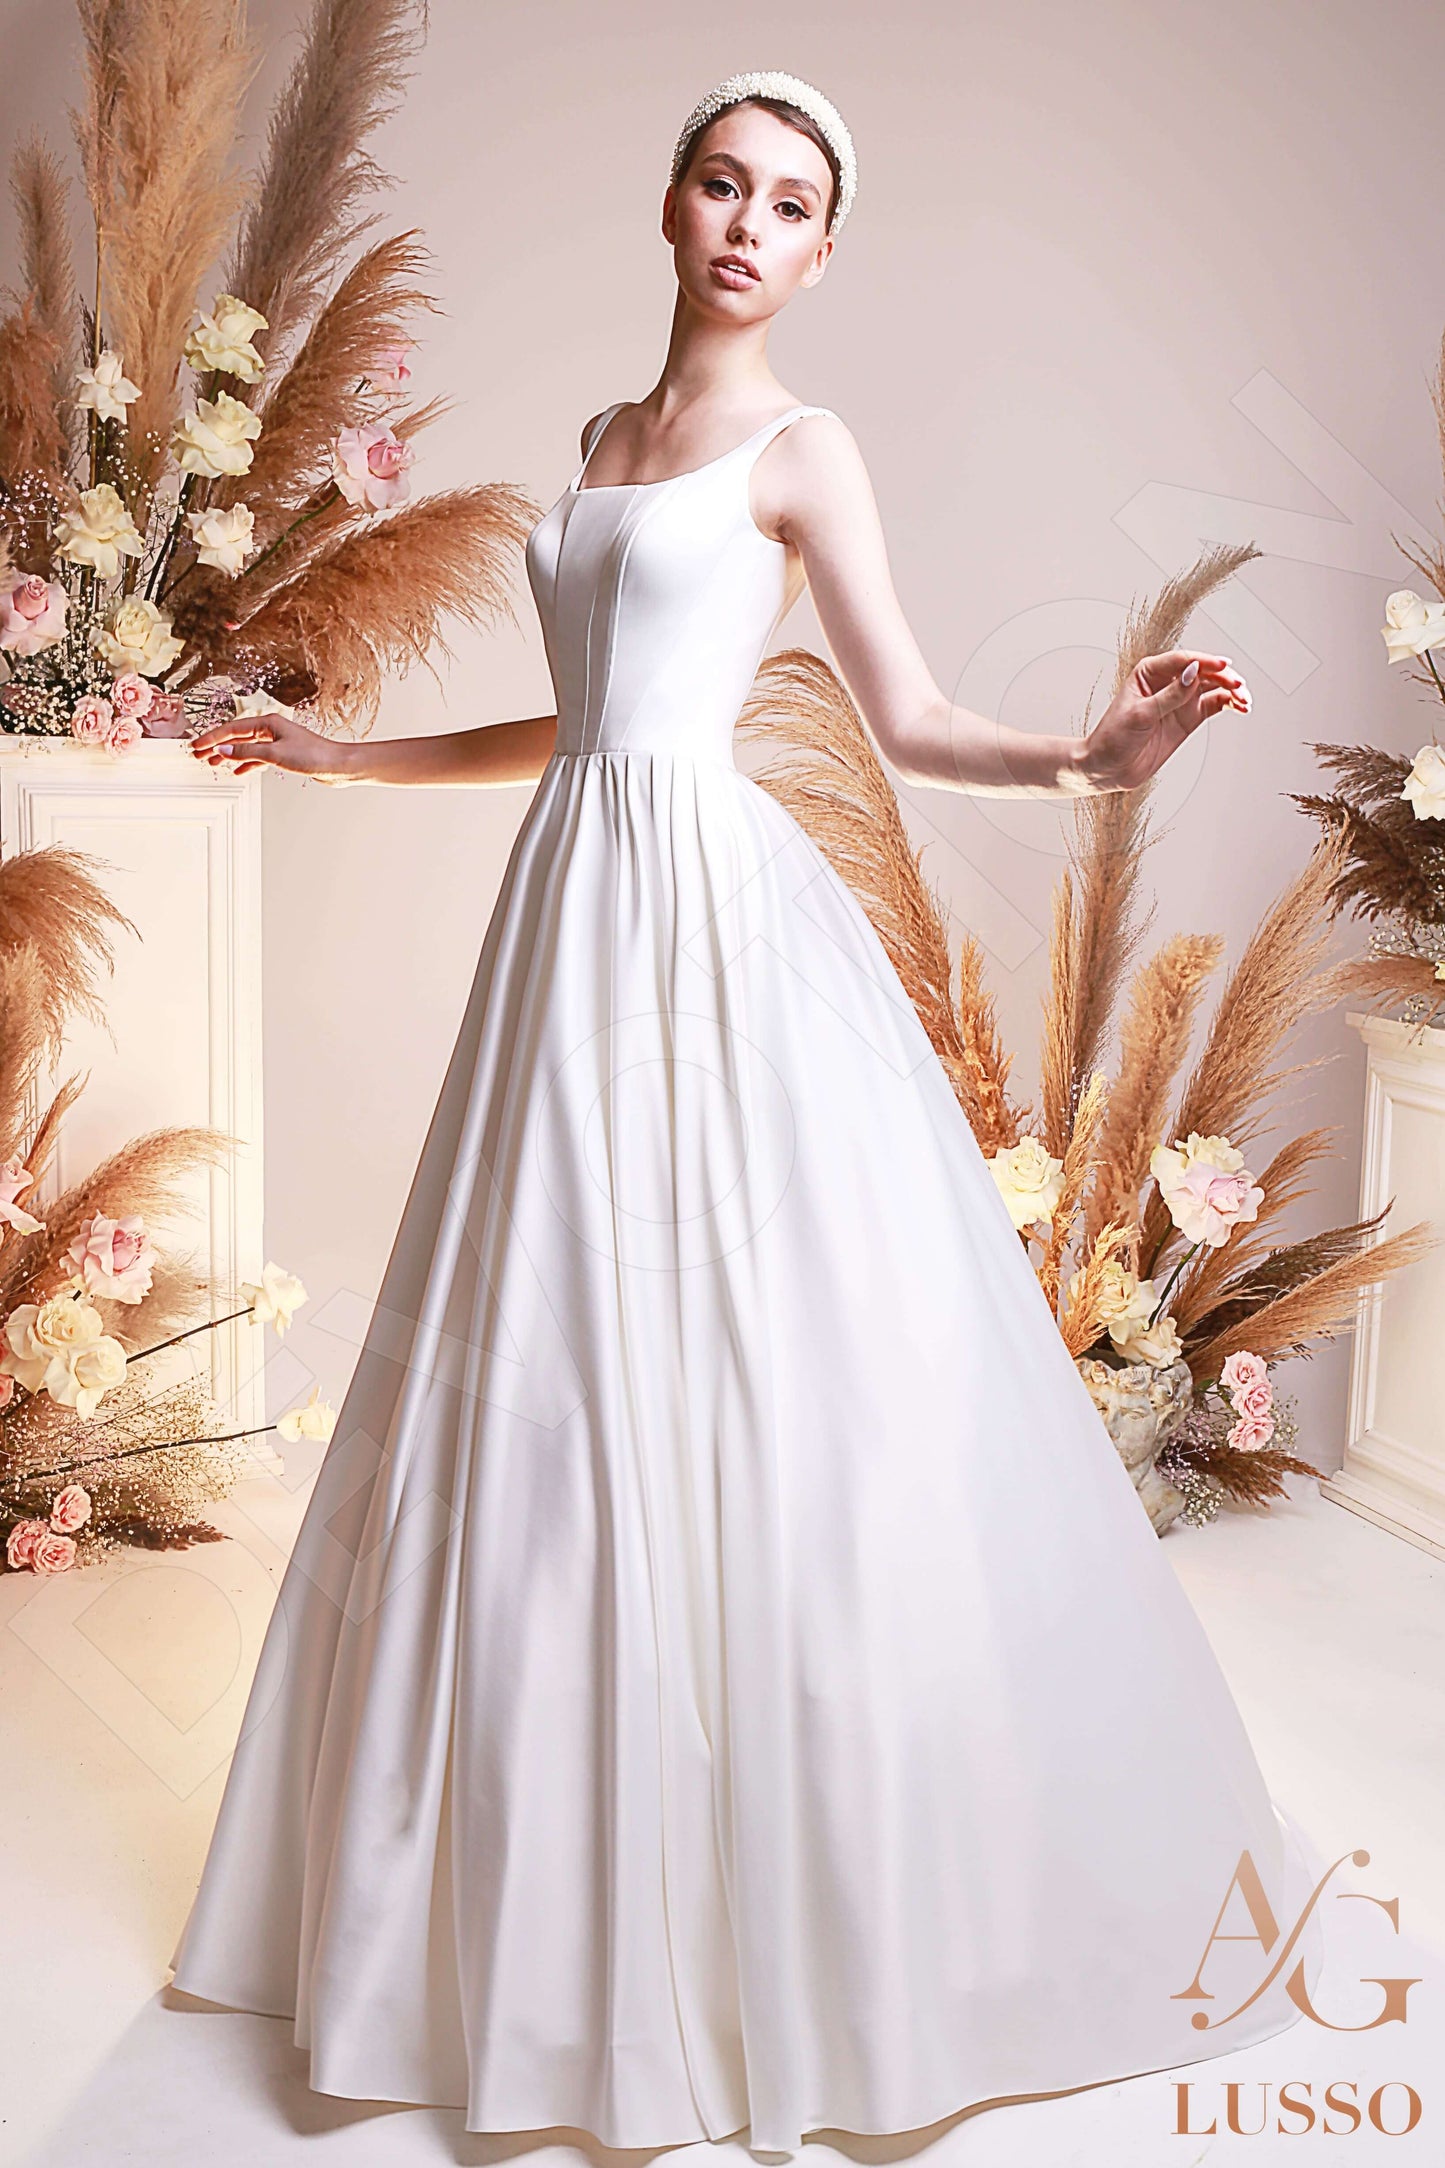 Vidalia Open back A-line Sleeveless Wedding Dress 2